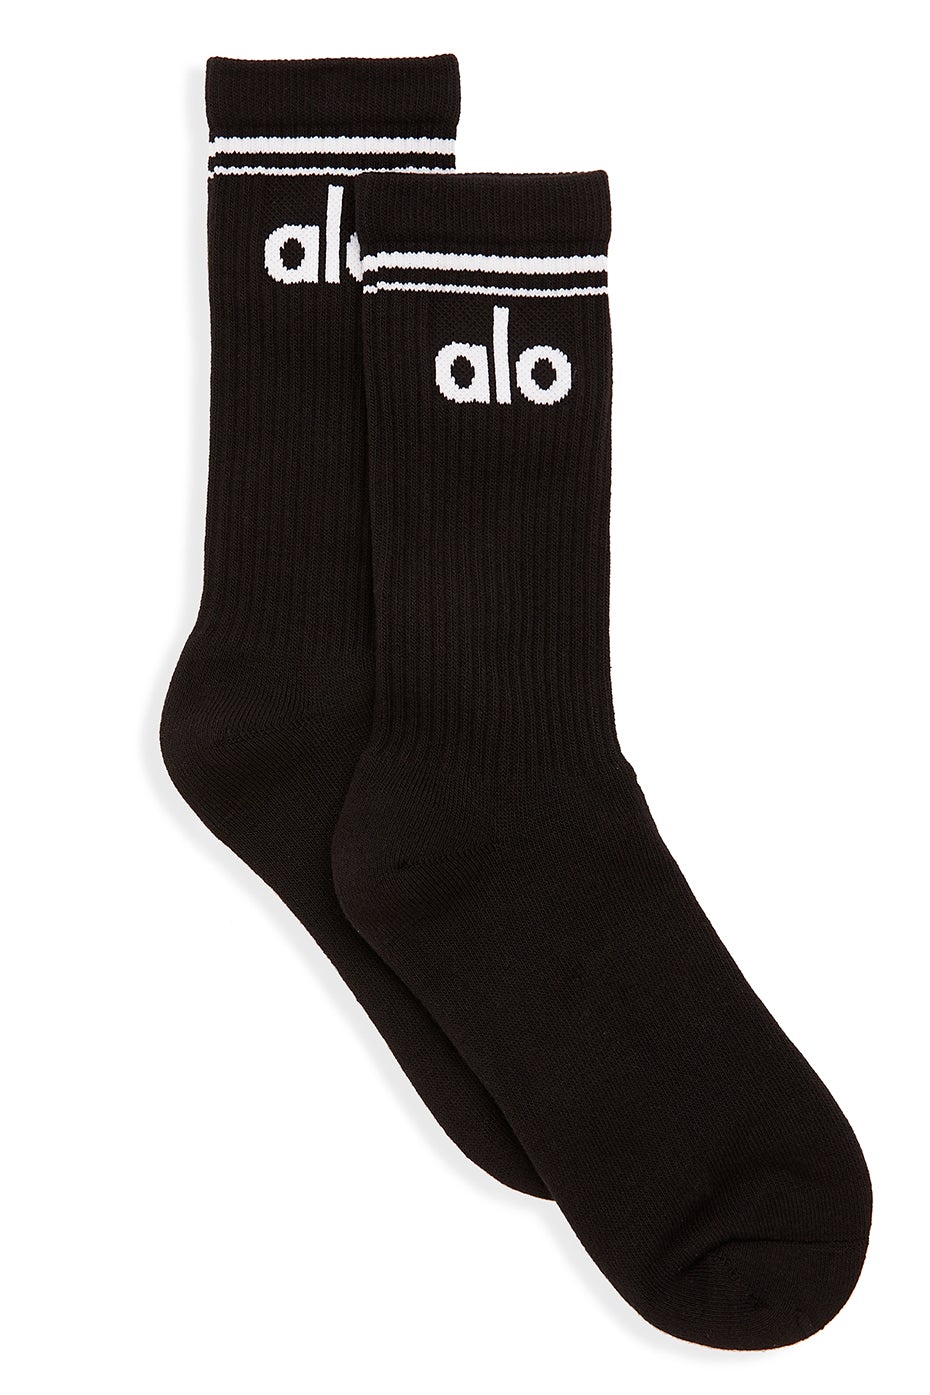 Shop ALO Yoga Unisex Street Style Bi-color Plain Logo Socks